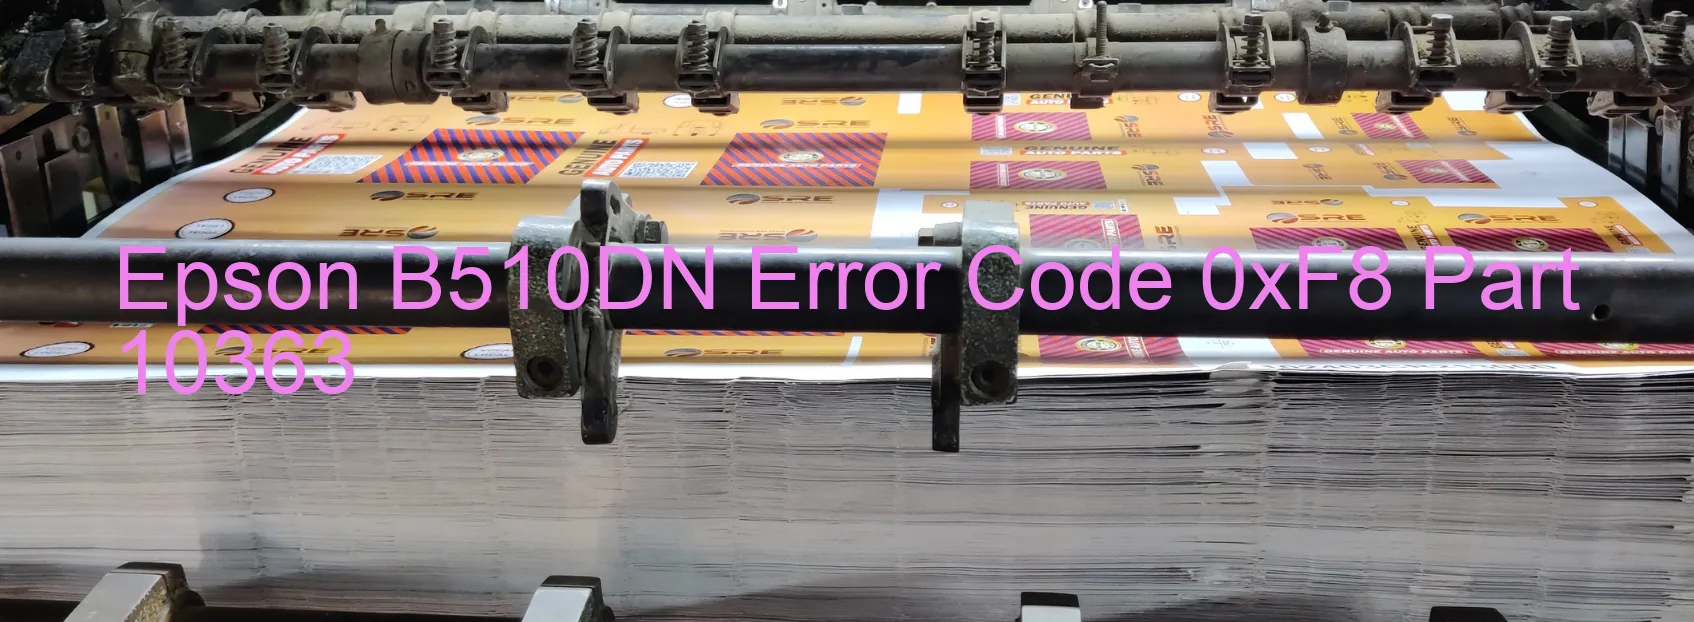 Epson B510DN Error Code 0xF8 Part 10363